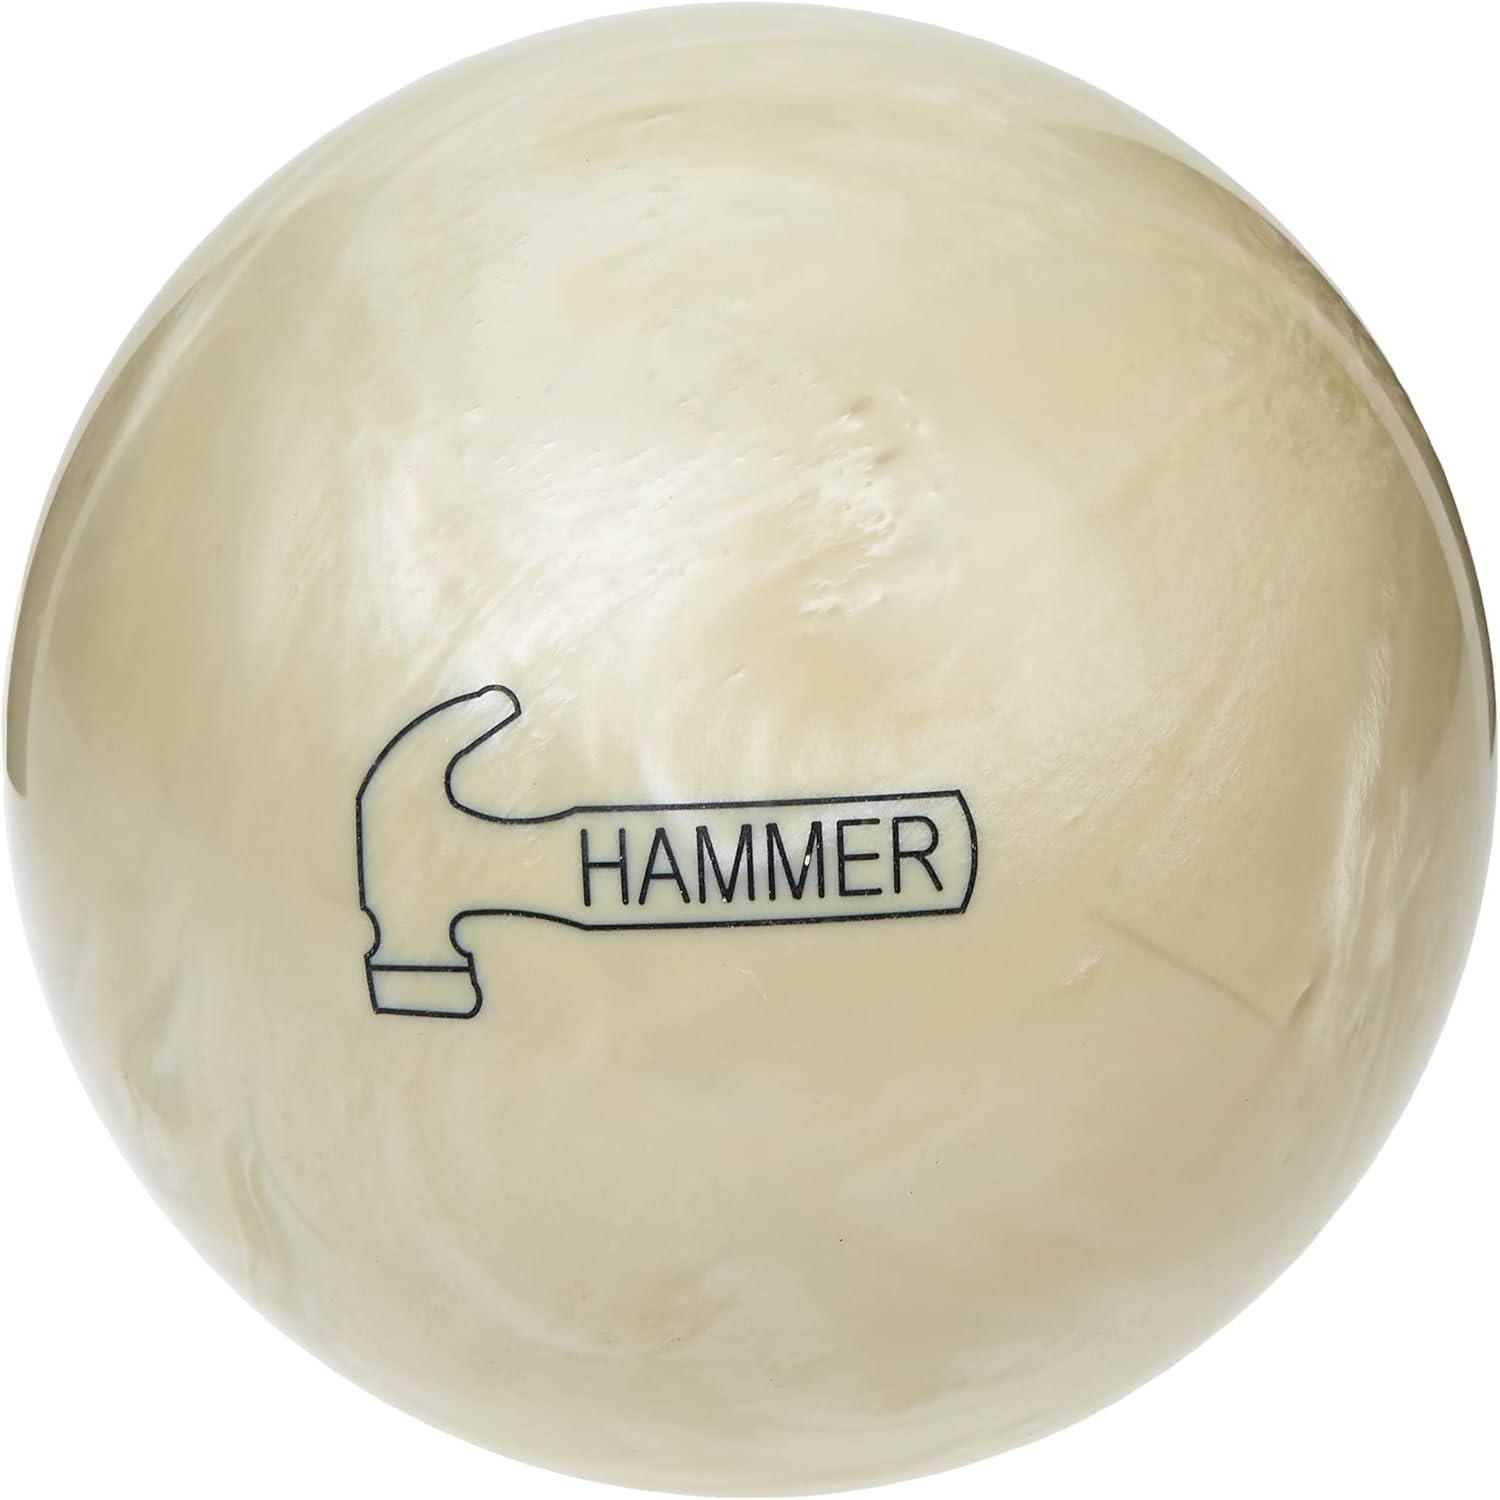 HammerBowling Ball